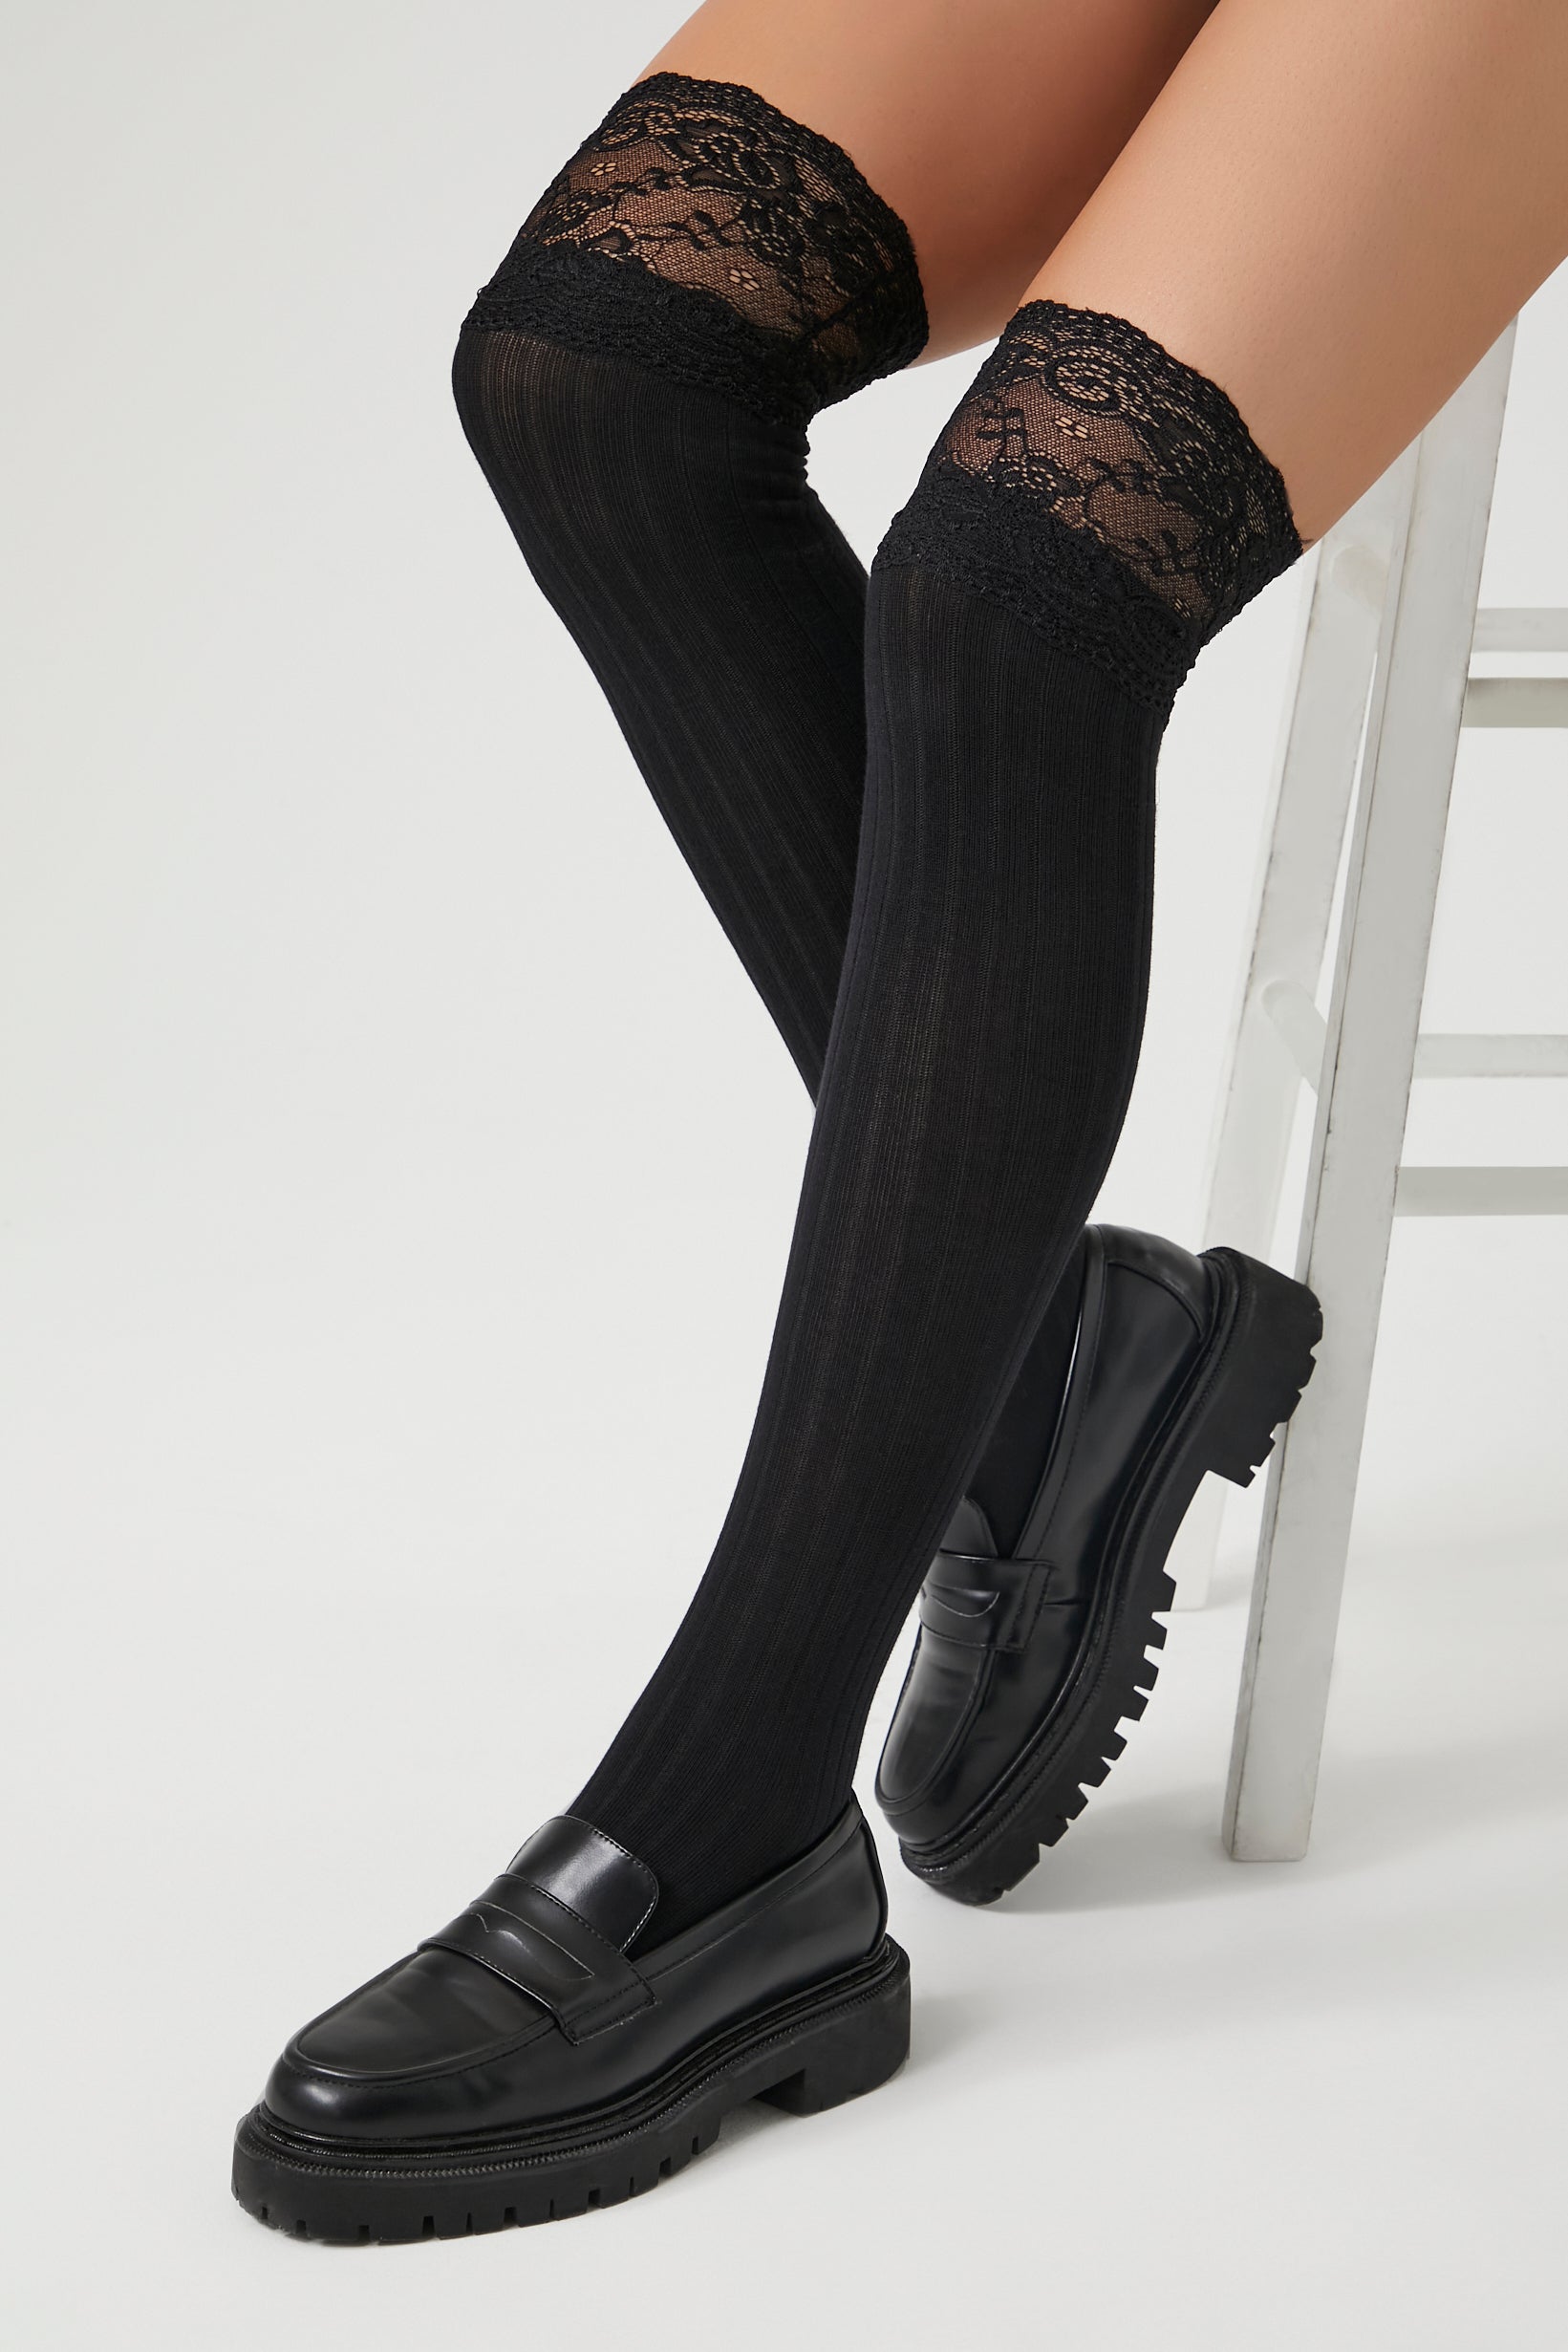 Black Lace-Trim Over-the-Knee Socks